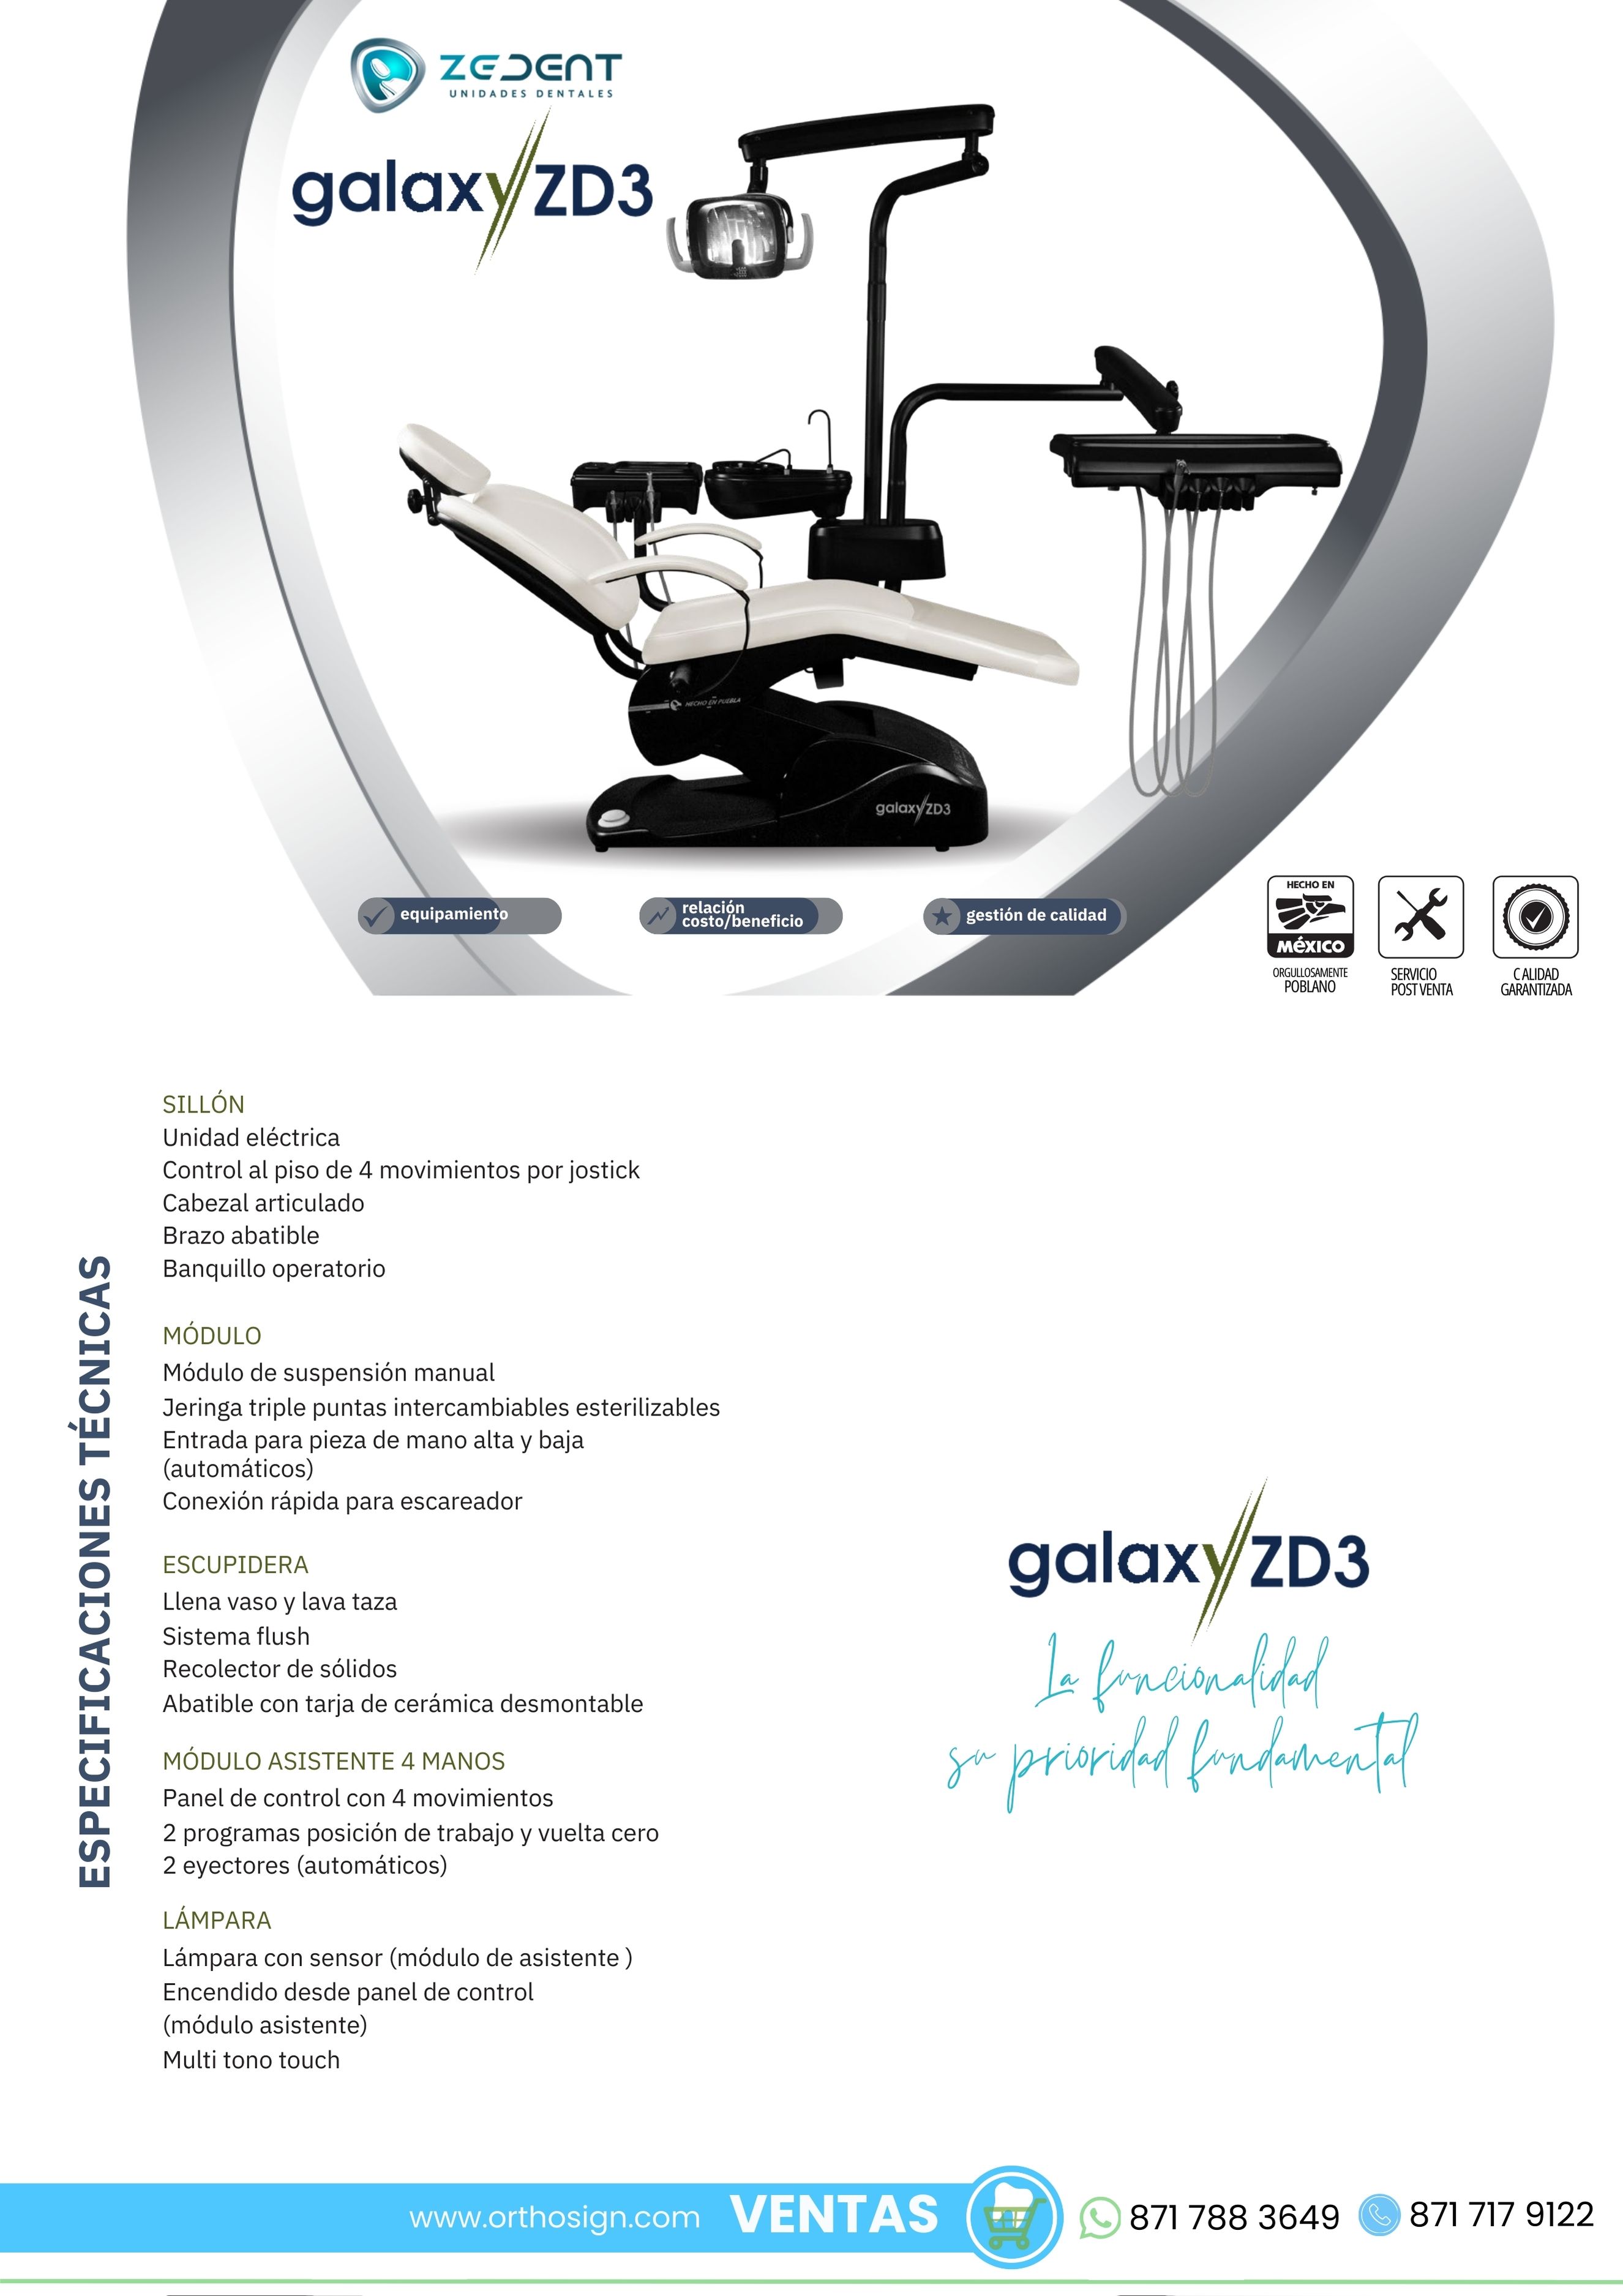 Unidad Dental Galaxy Zd3 - ZedentCatálogo  Productos Orthosign